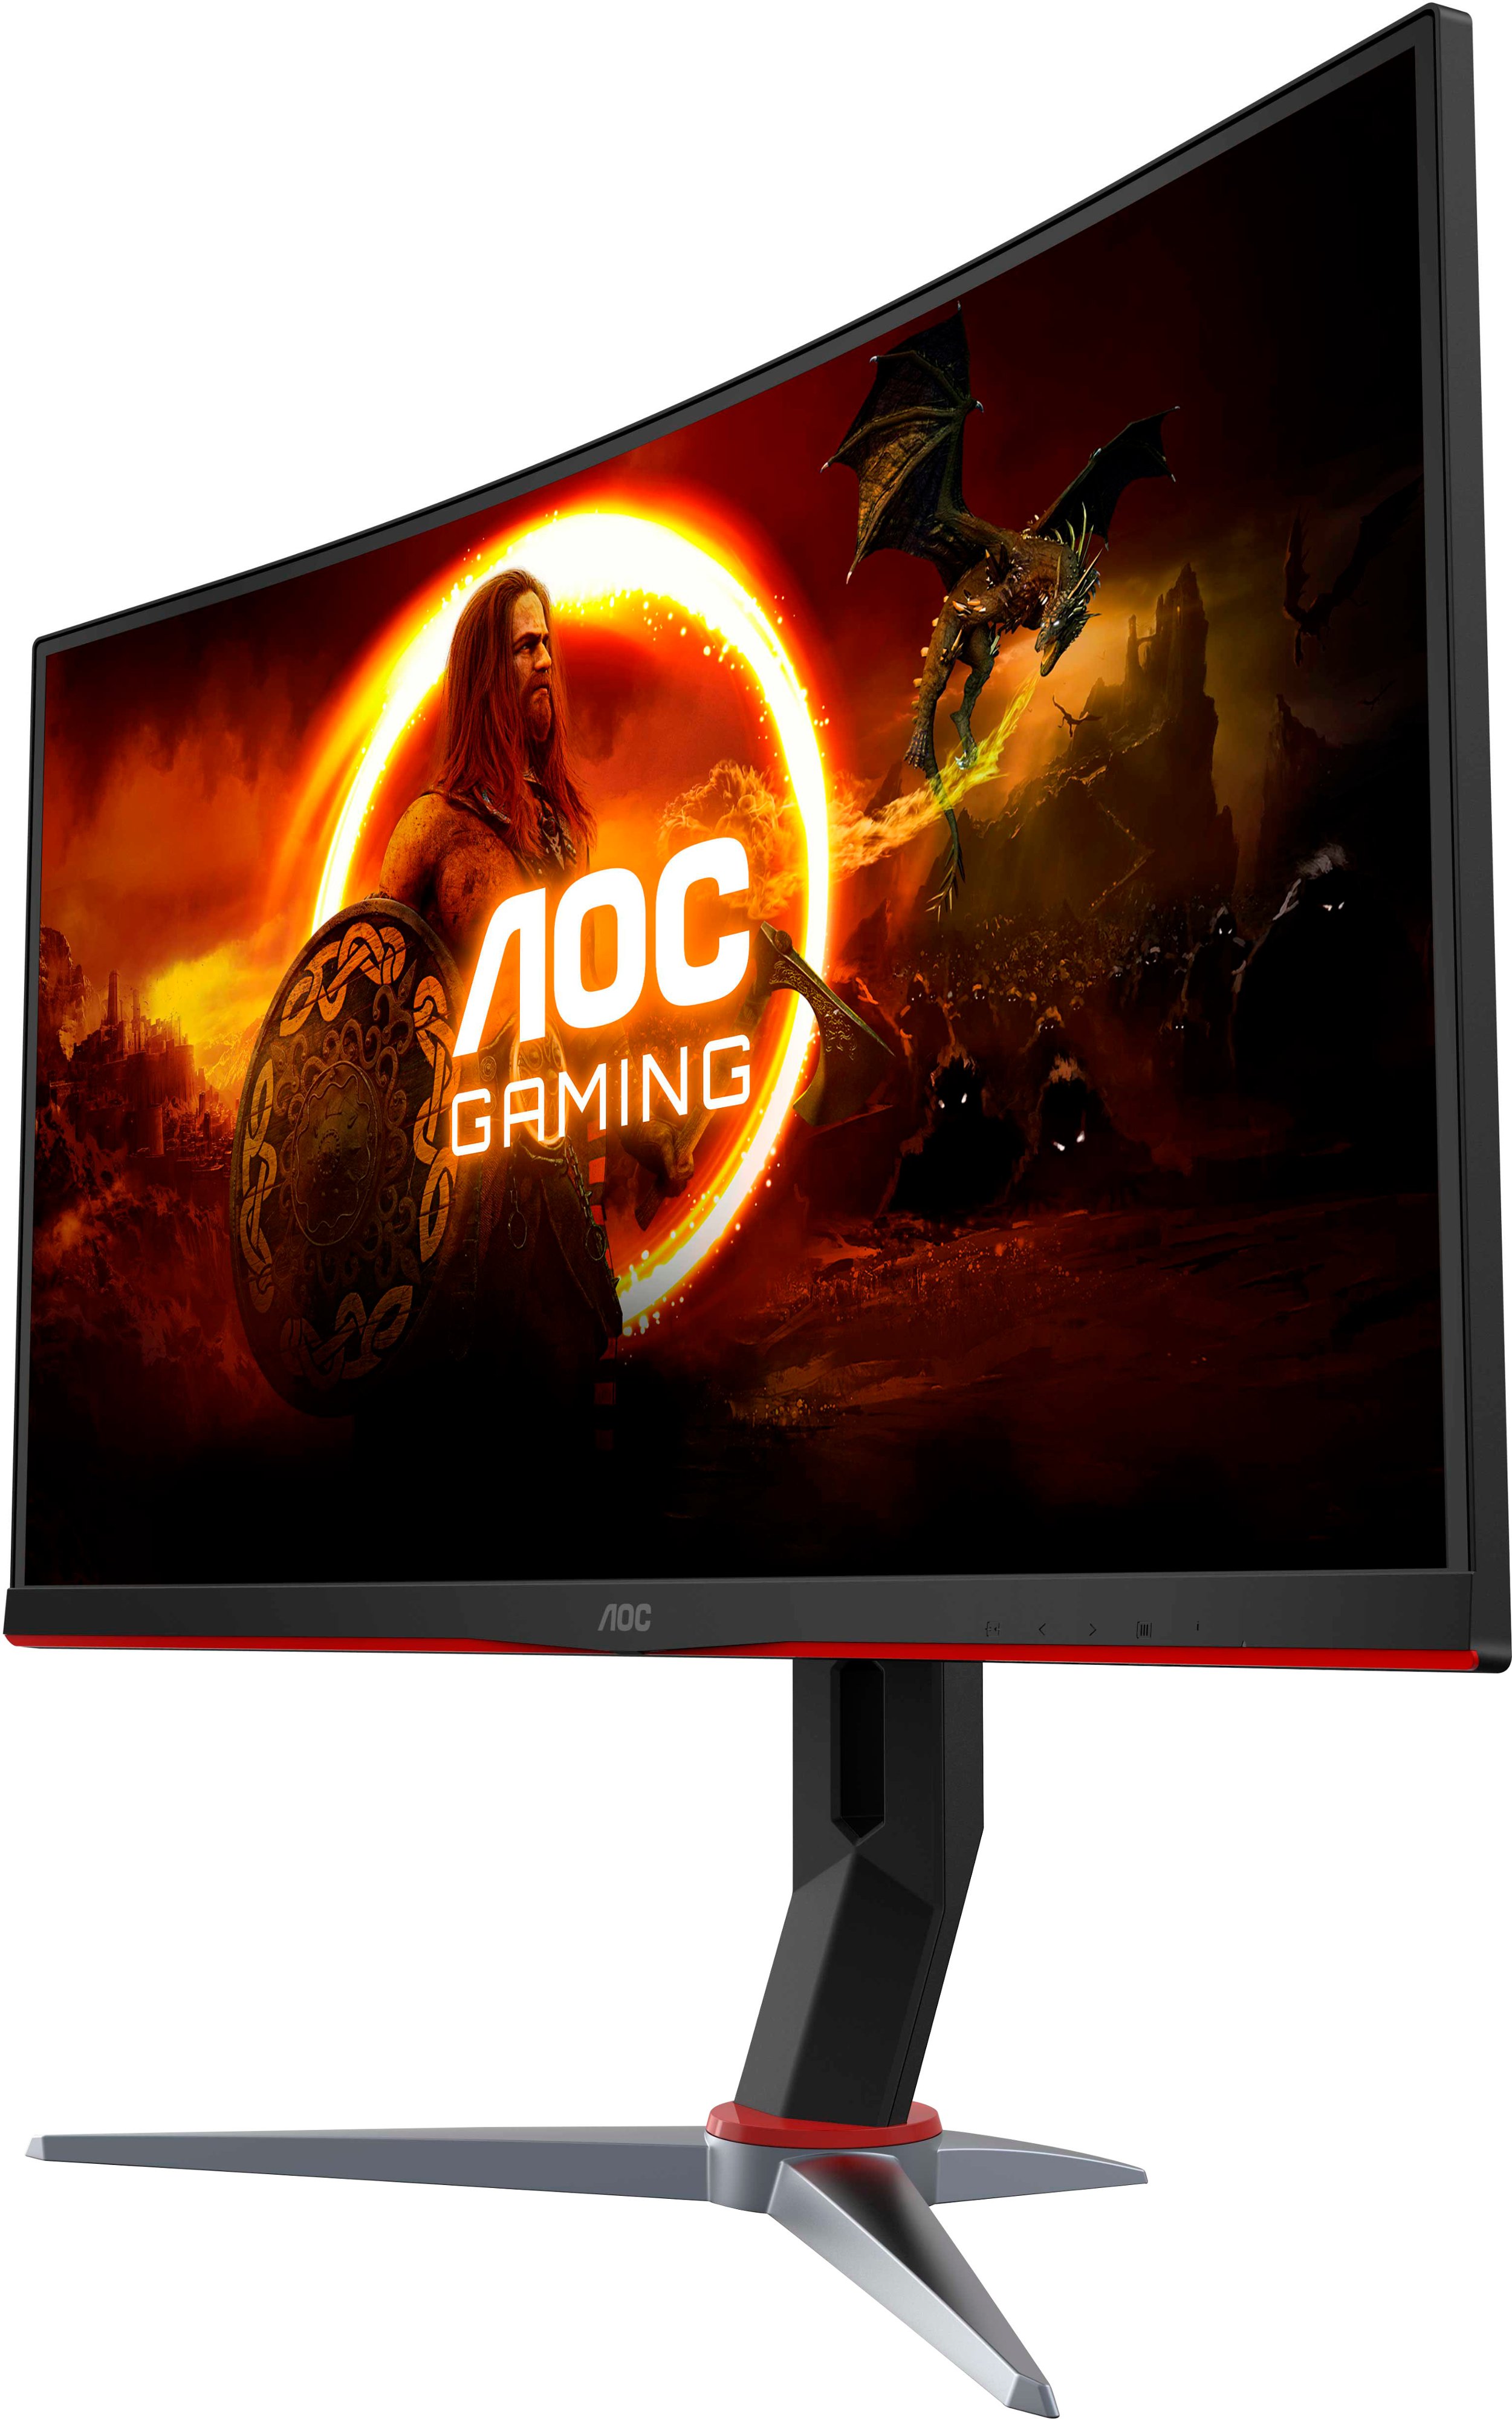 AOC G2 Series C27G2 27 LED Curved FHD FreeSync Premium Monitor  (DisplayPort, HDMI, VGA) Black/Red C27G2 - Best Buy